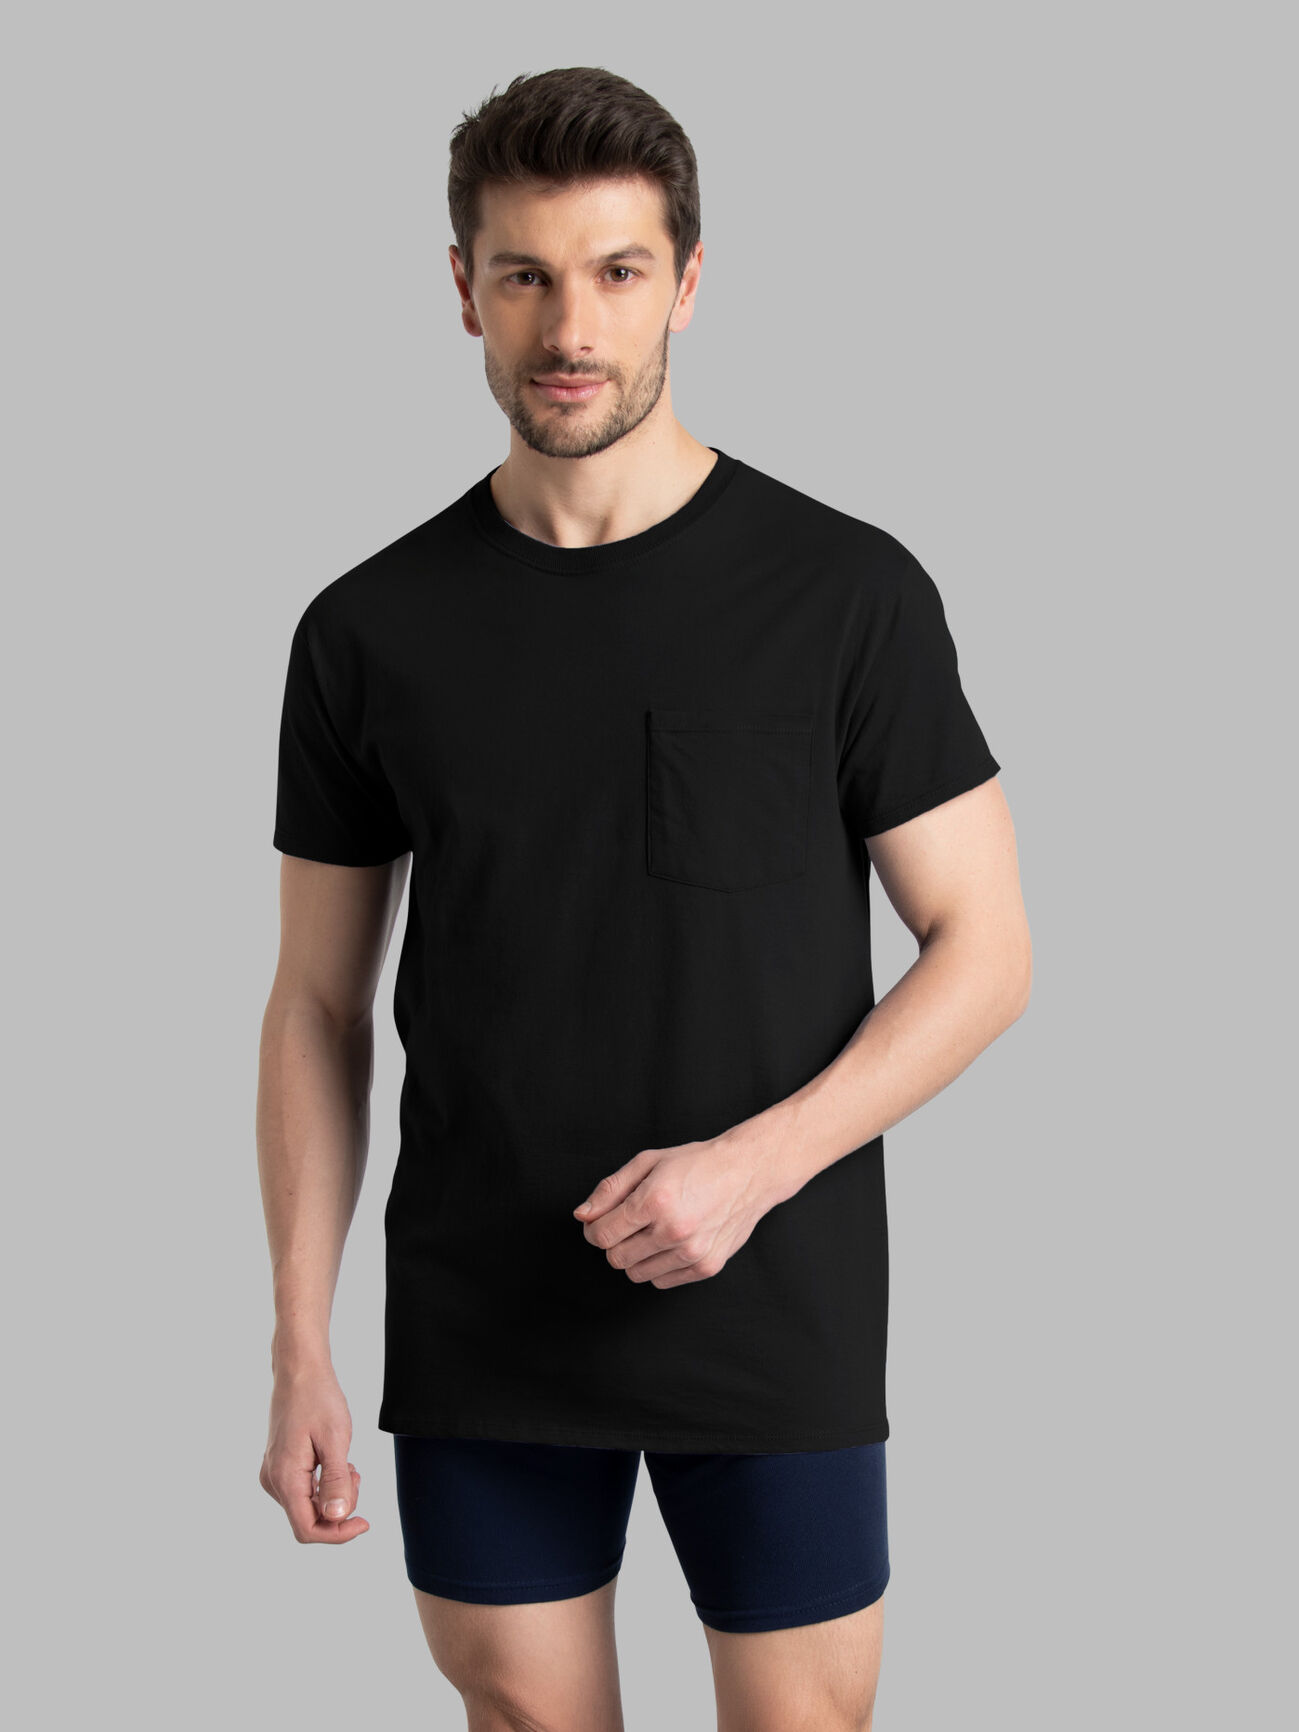 Essentials Women's Slim-Fit Short-Sleeve Crewneck T-Shirt, Pack of 2